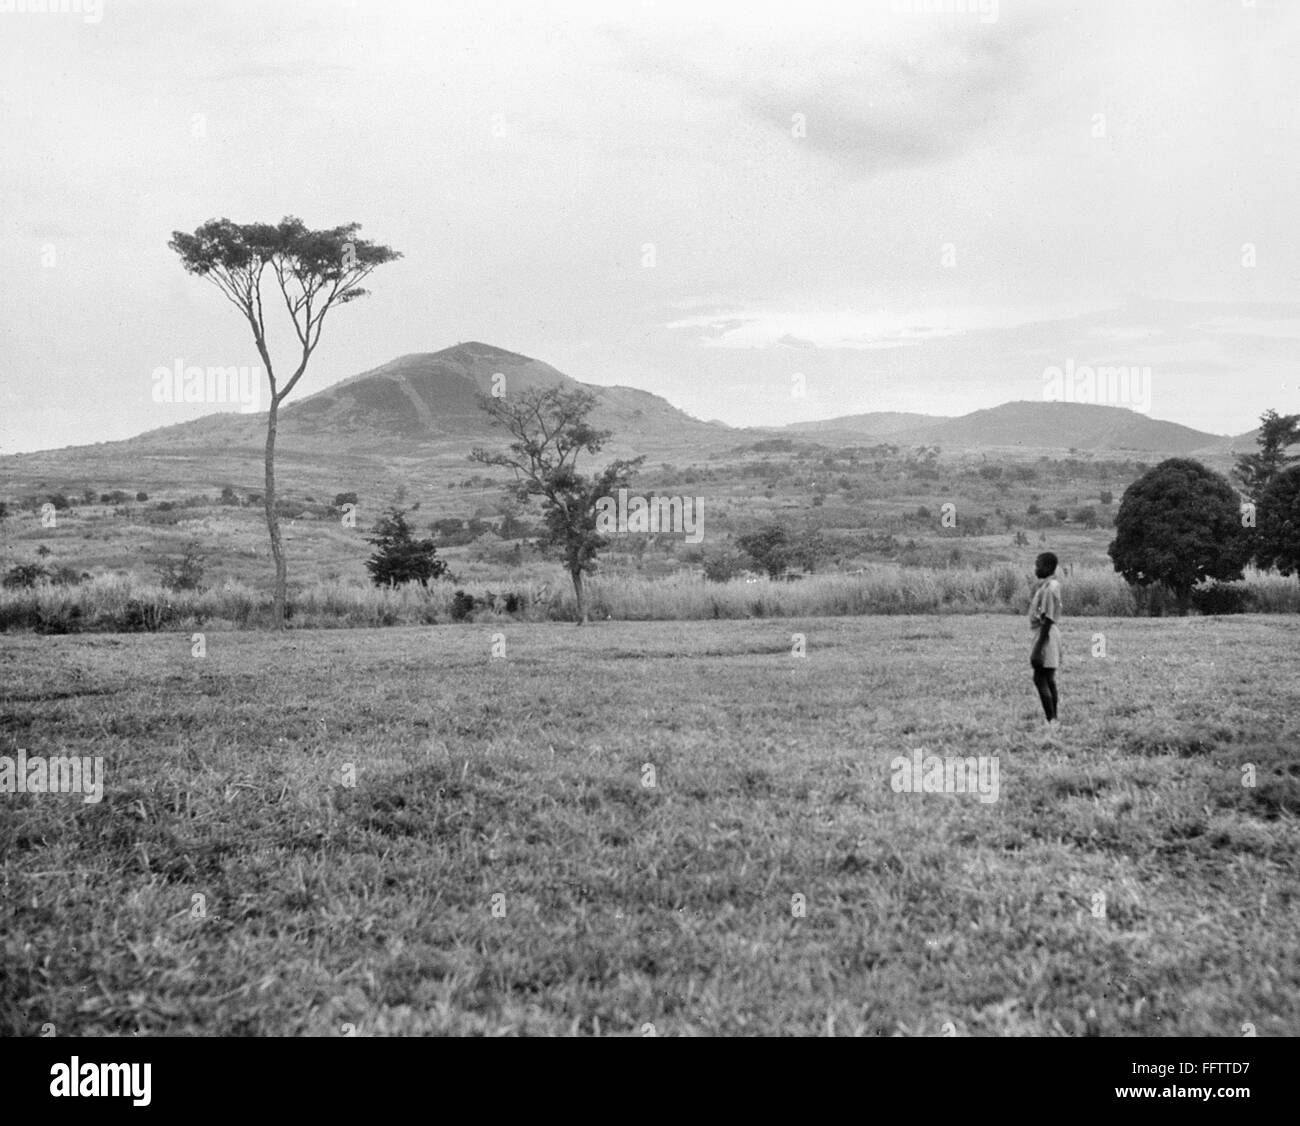 TANGANYIKA: COUNTRY SCENE. /nCountry scene near Longido, Tanganyika (present-day Tanzania), near the border with Kenya. Photographed in 1936. Stock Photo